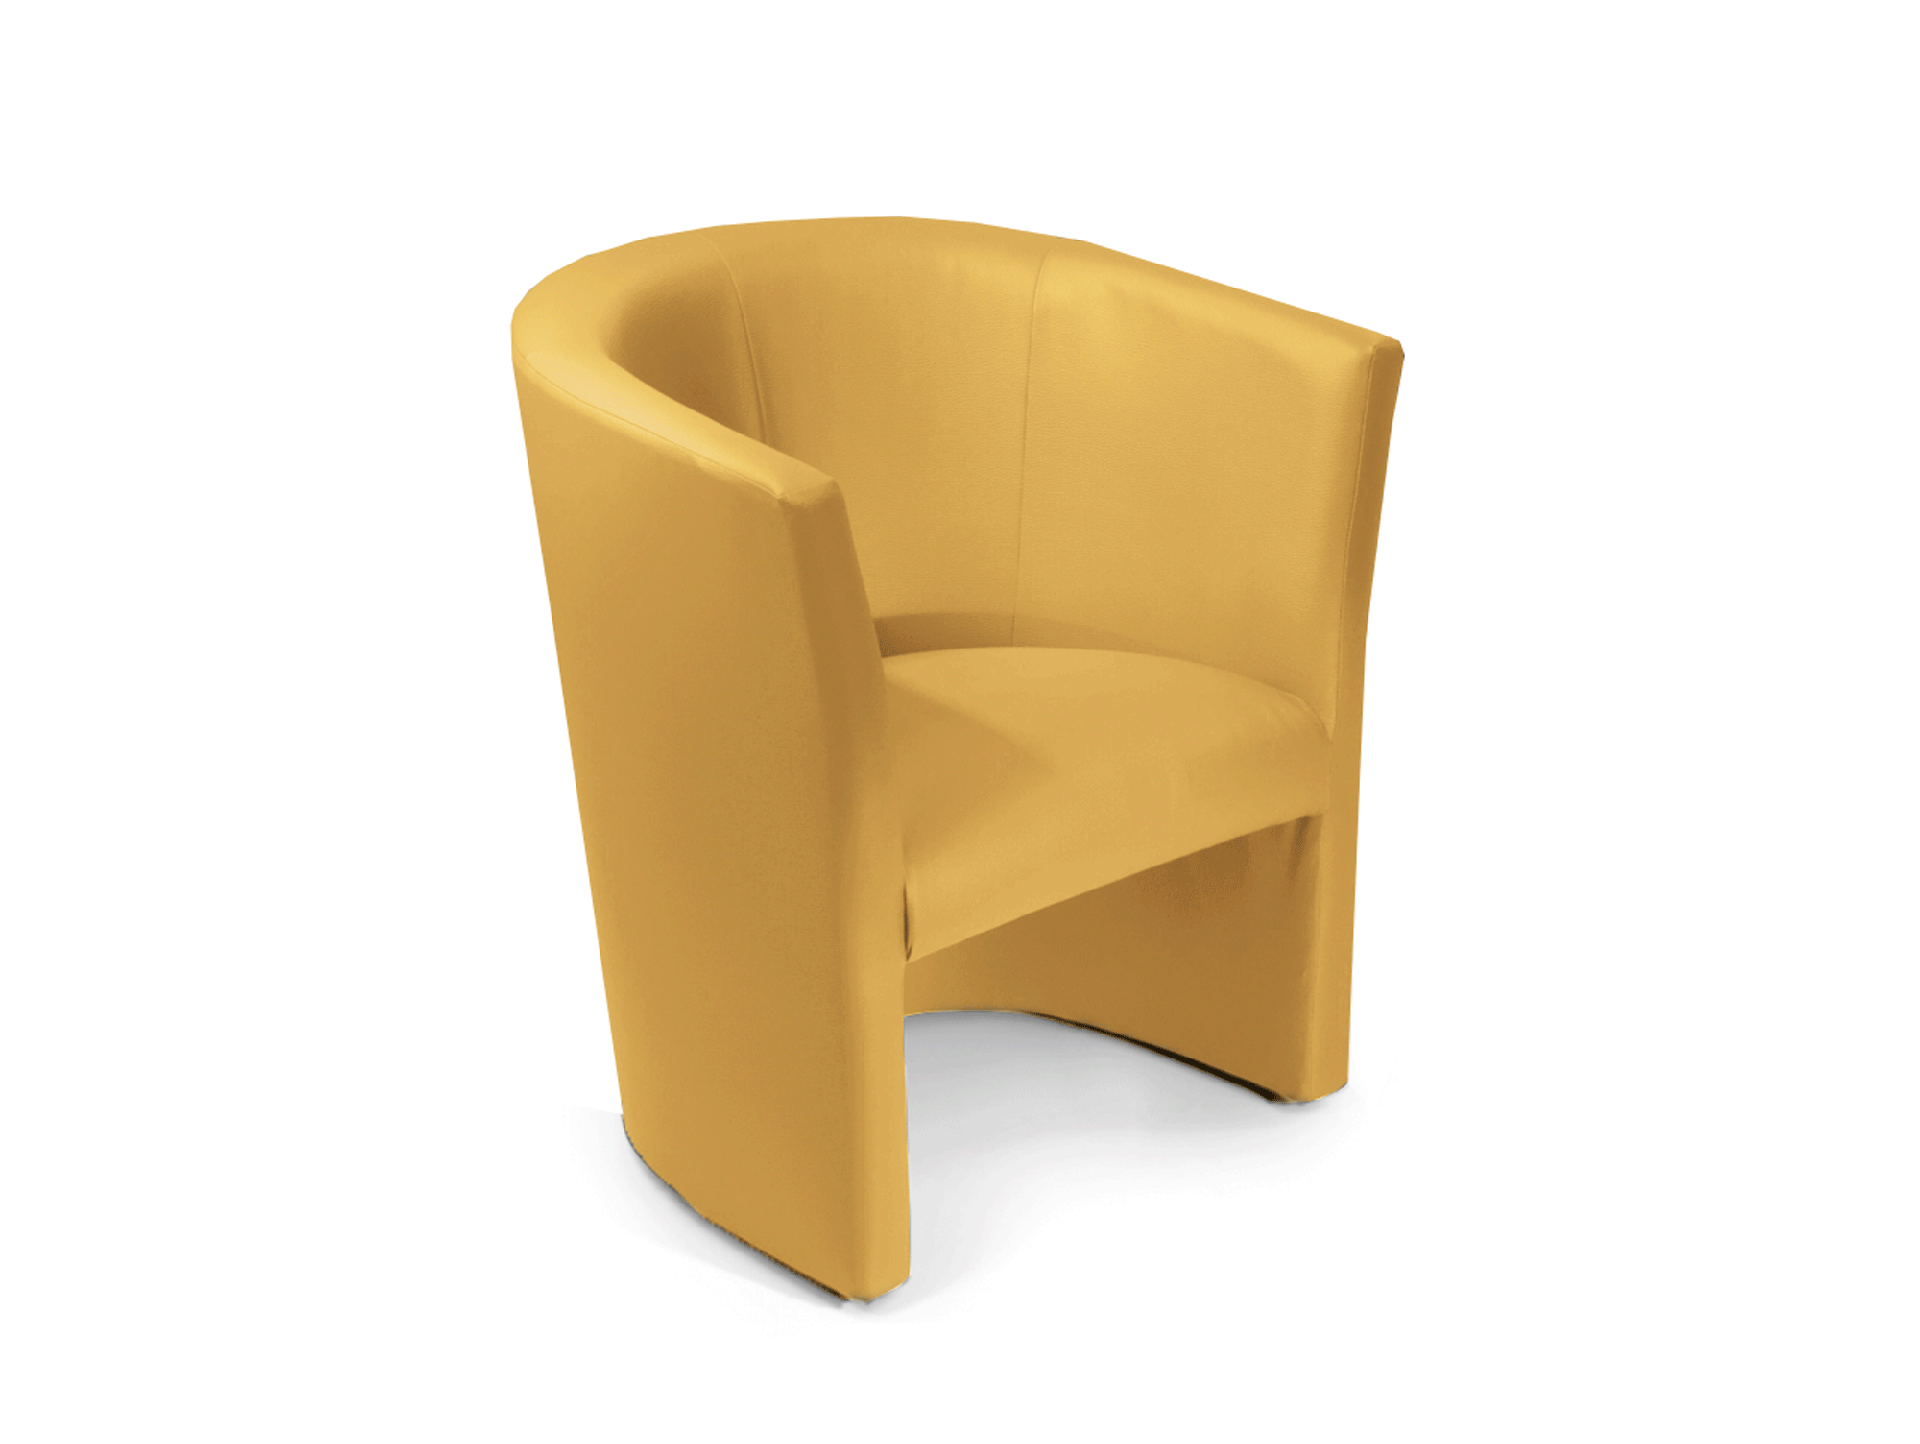 CHARLY Sessel / Cocktailsessel im Lederlook, Material Kunstleder gelb